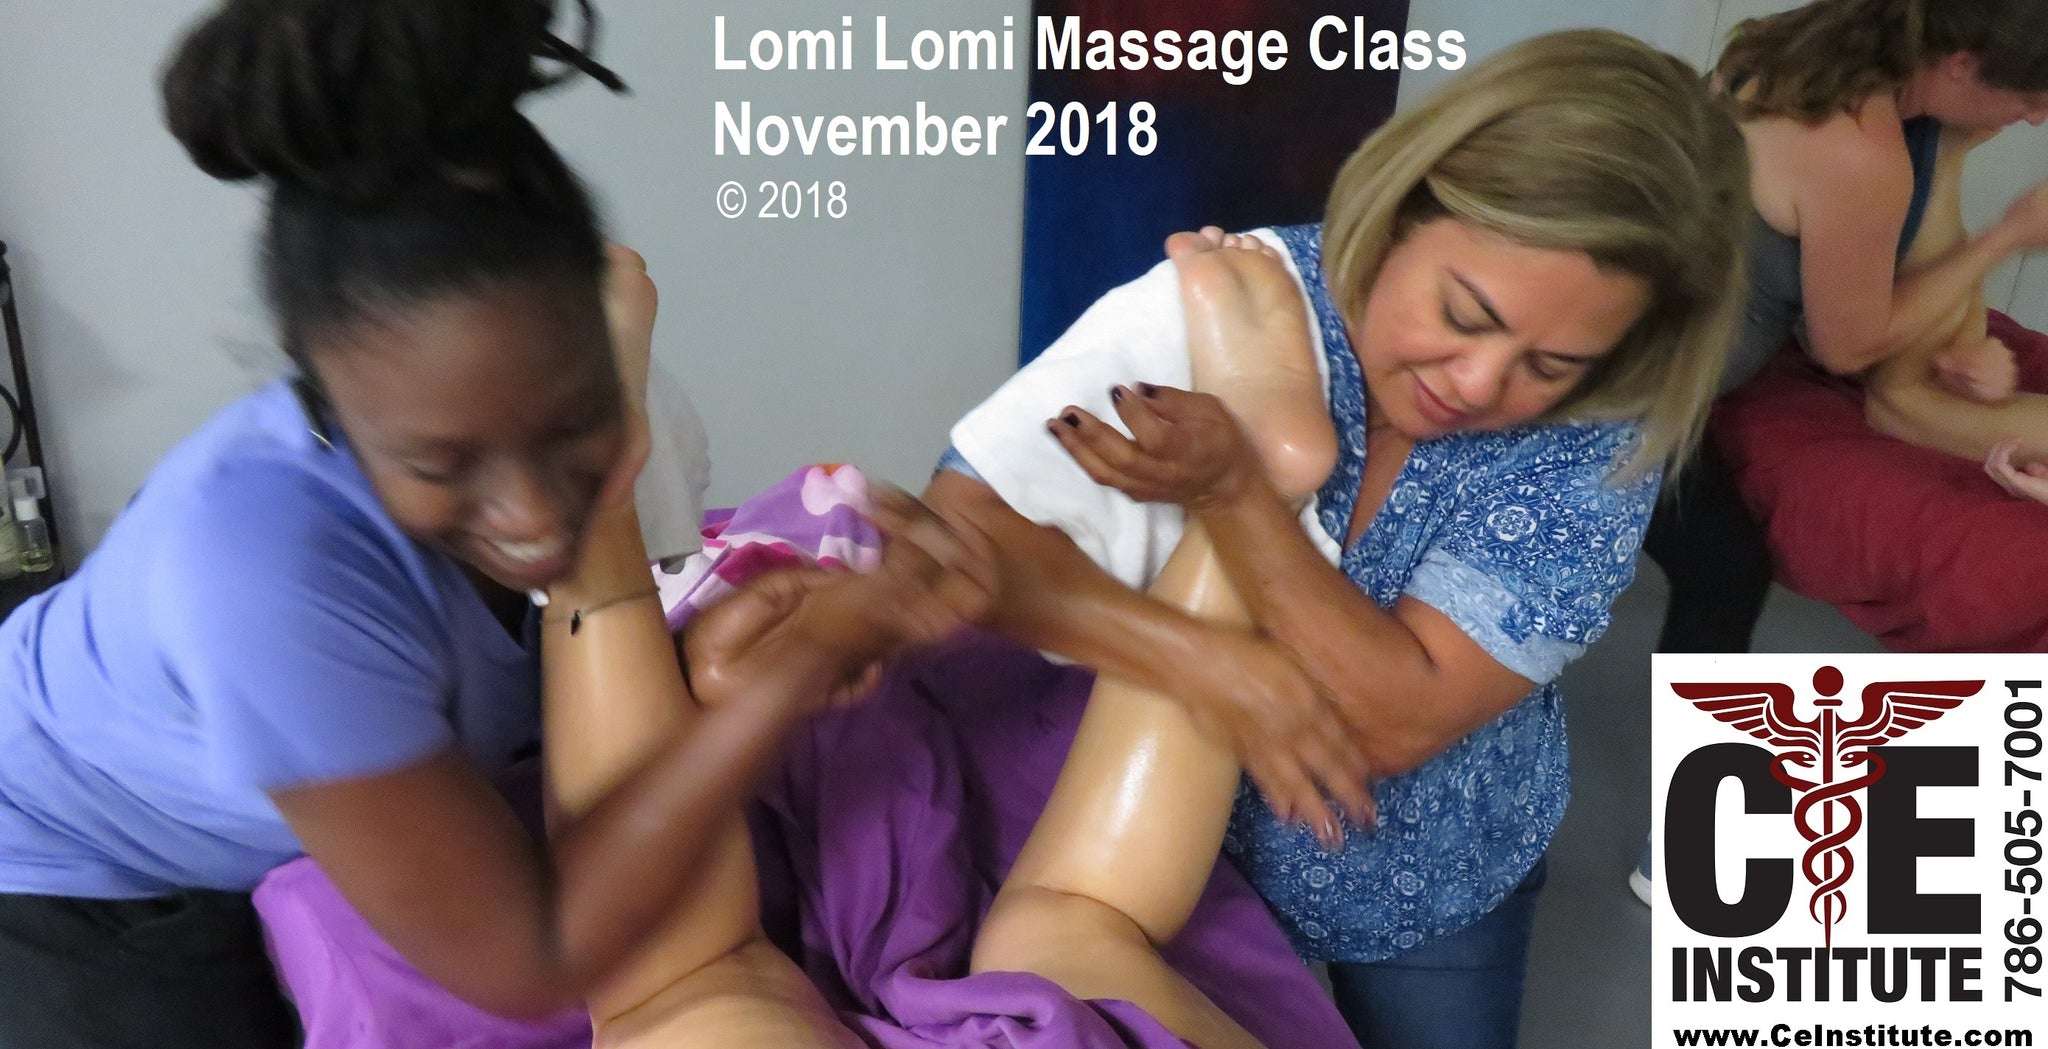 24 CE Hour Florida Massage Therapist 2019 License Renewal ...